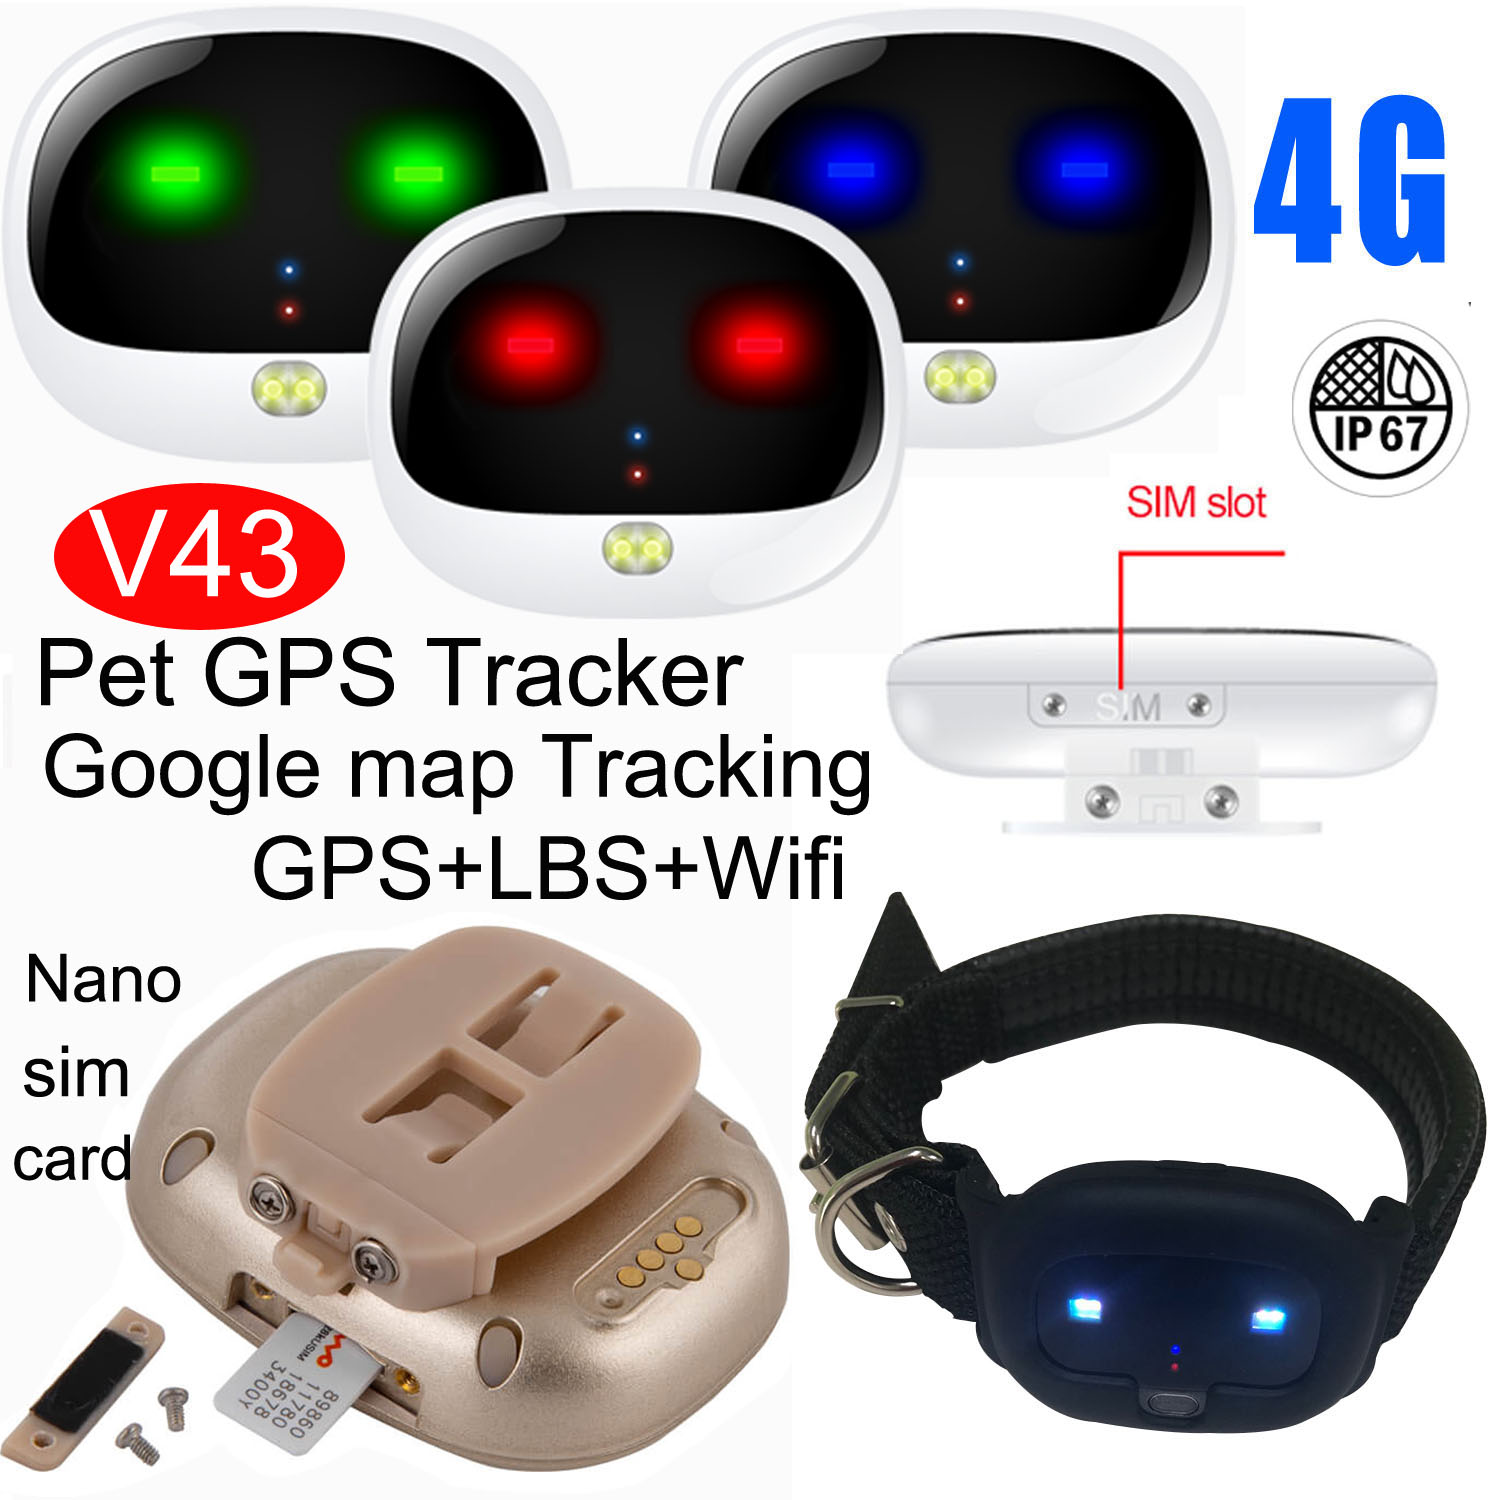 IP67 Waterproof Pets Tracking LTE GPS Tracker V43